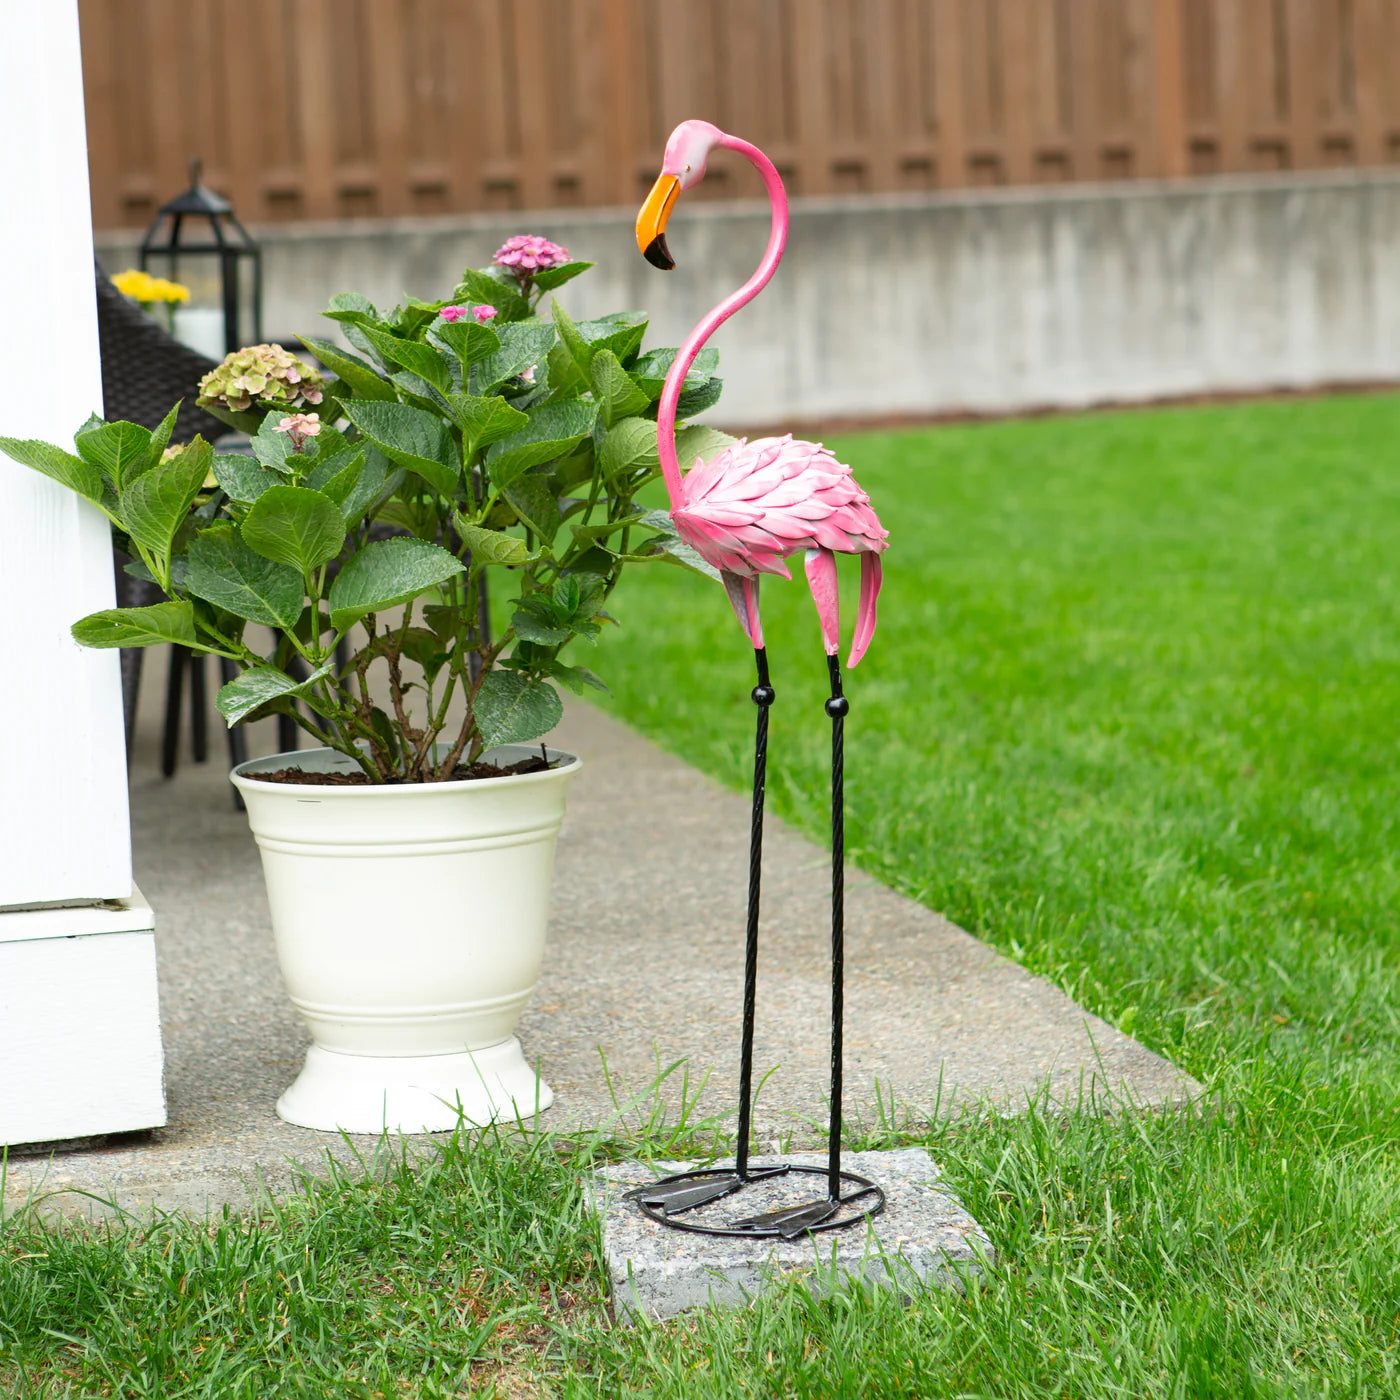 Tropical Tango Flamingo Statue